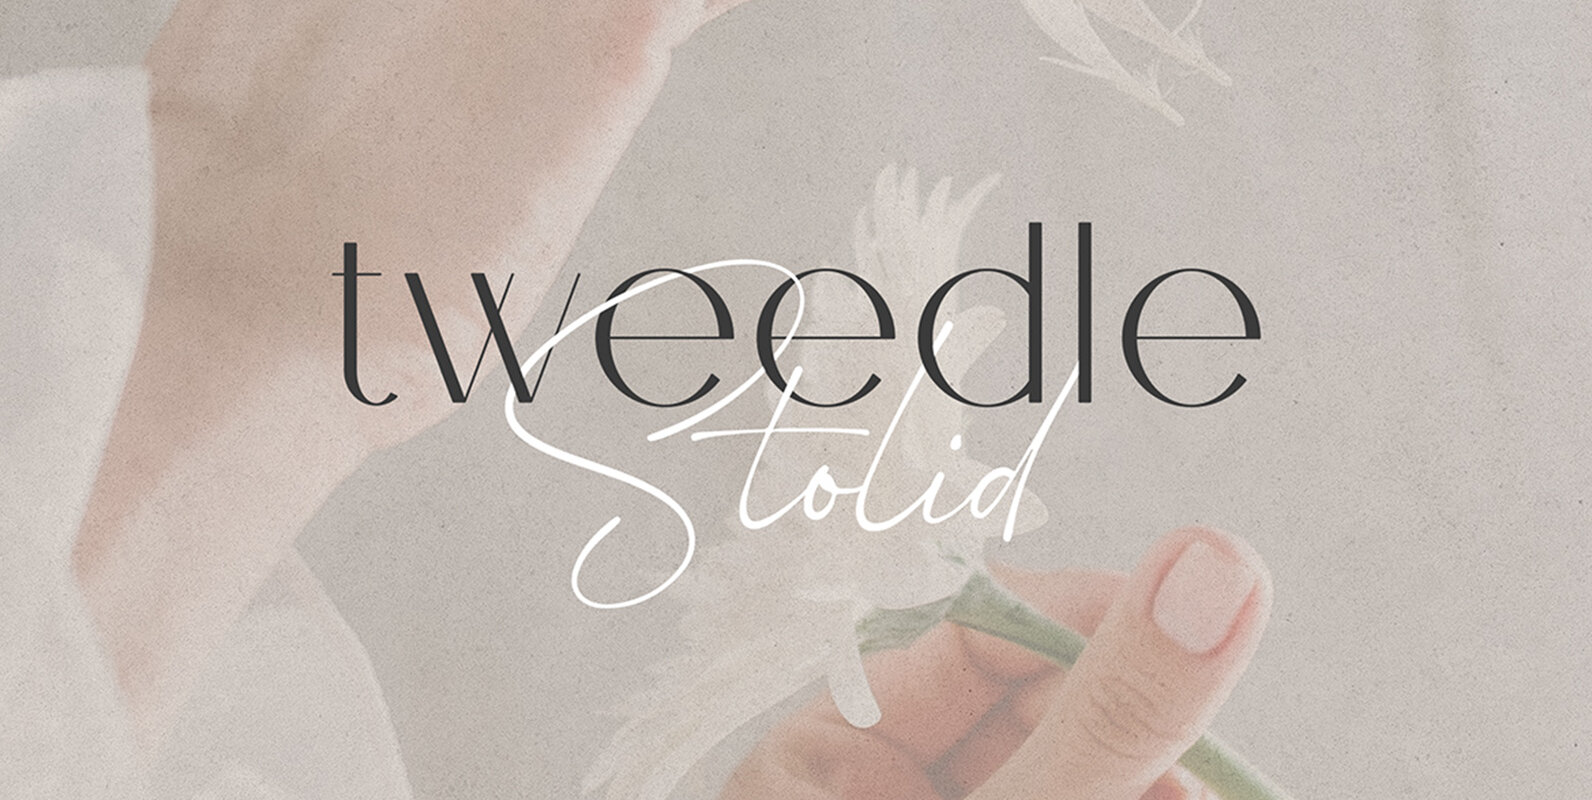 Tweedle and Stolid